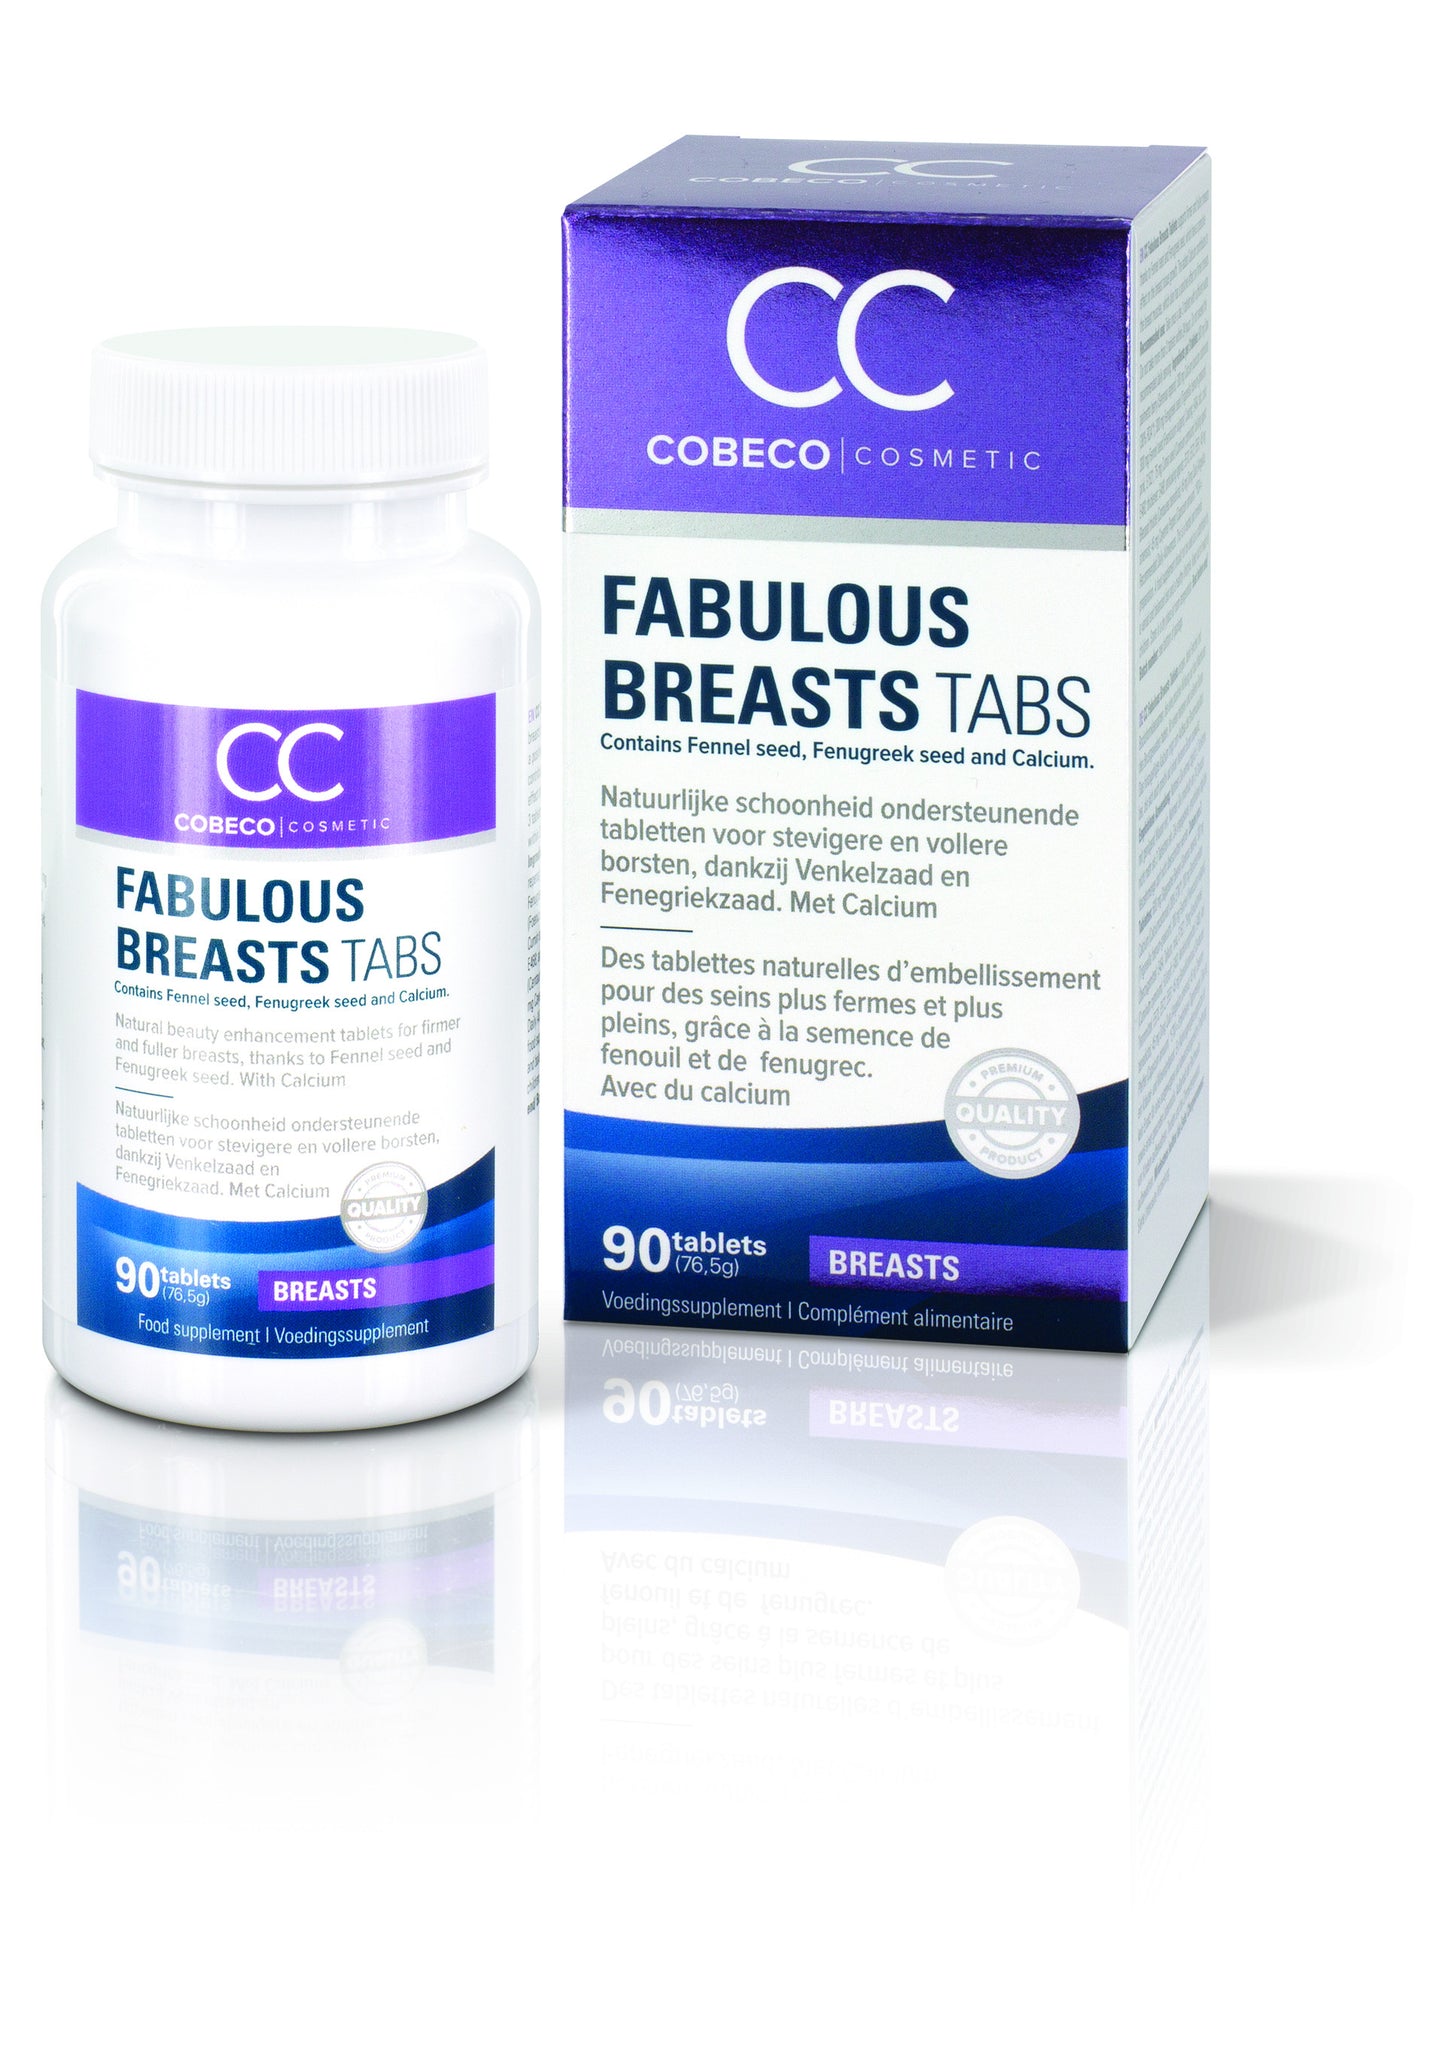 Cc Fabulous Breasts Caps 90pcs compresse volumizzante seno